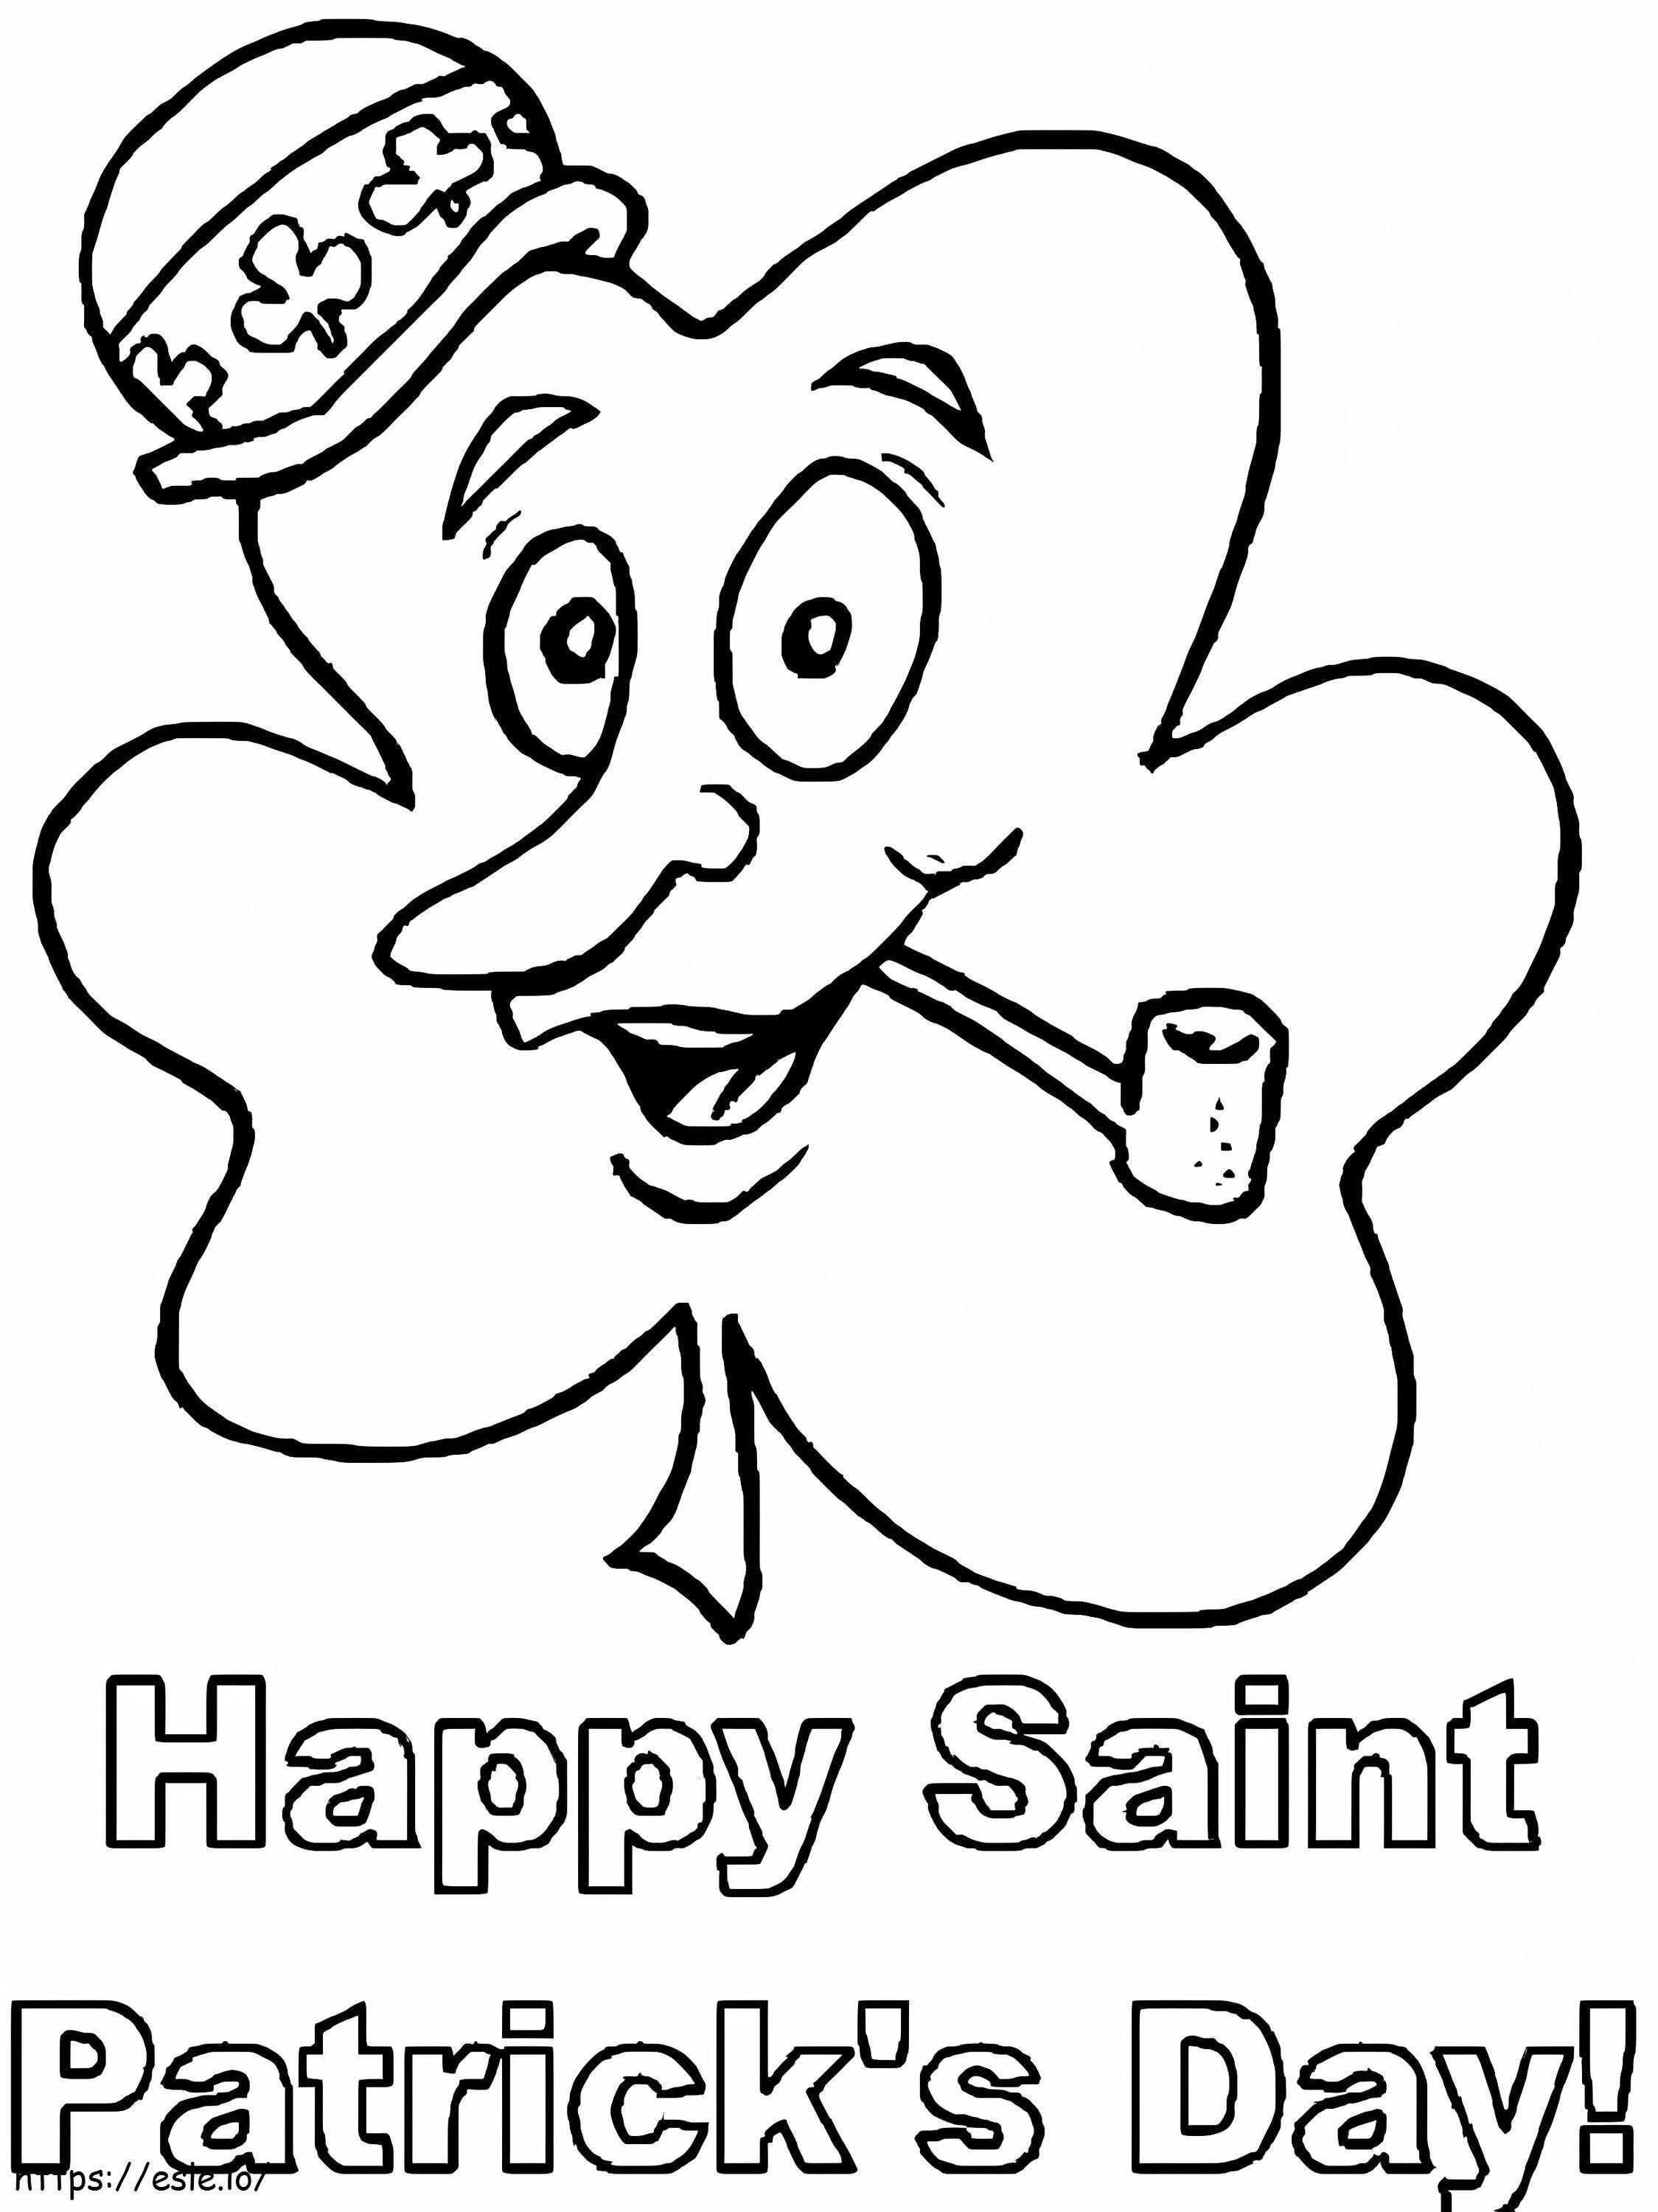 Happy Saint Patricks Day Shamrock coloring page